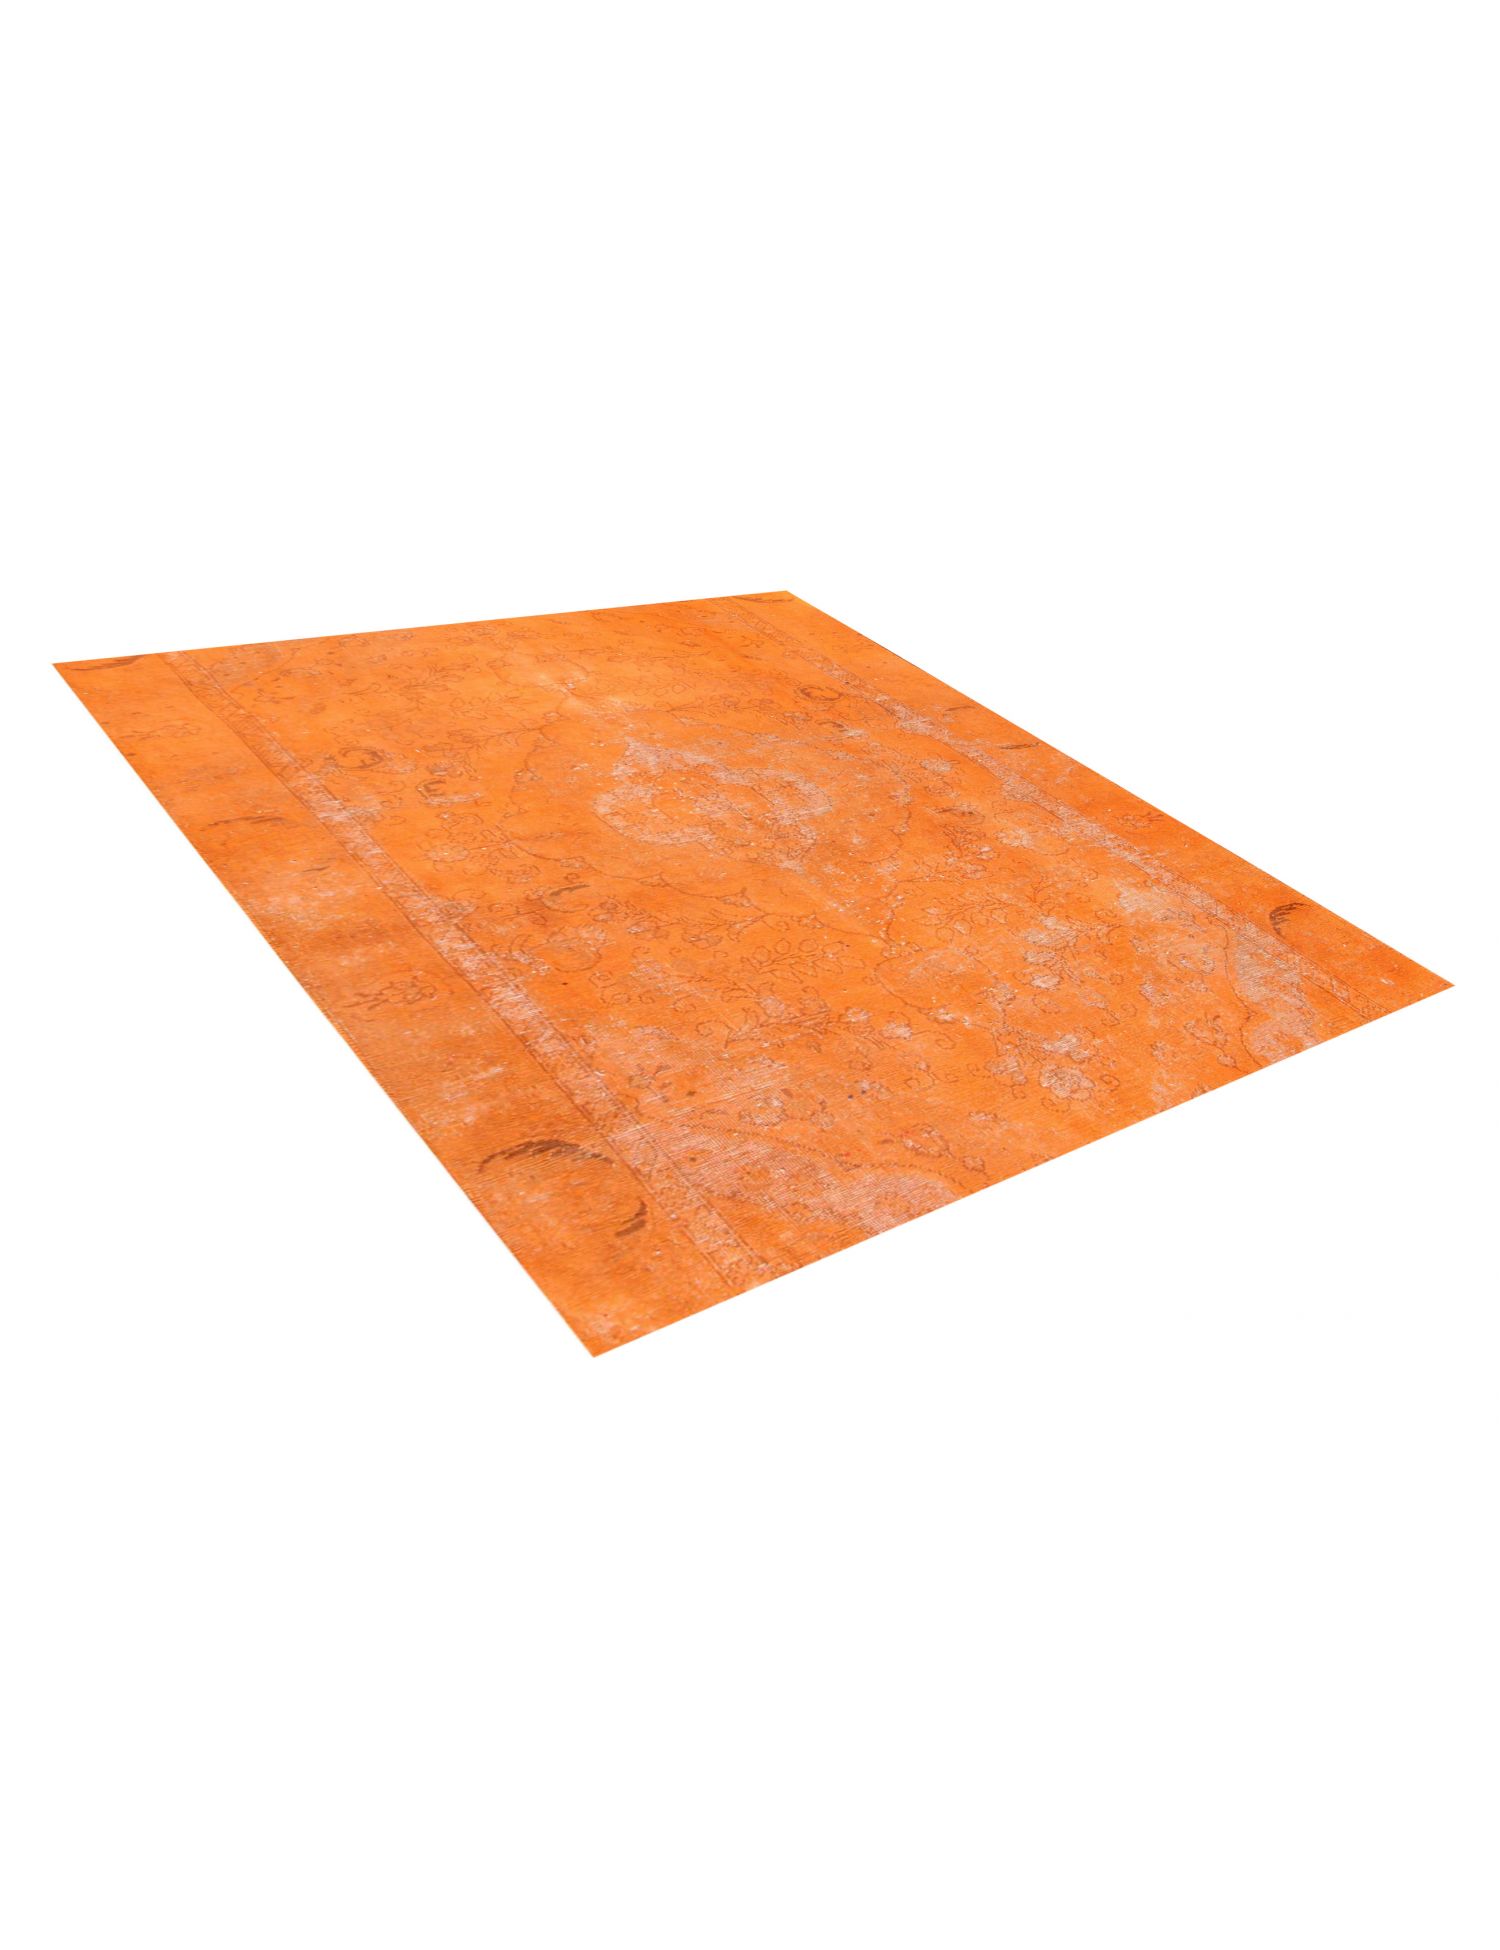 Quadrat  Vintage Teppich  orange <br/>174 x 174 cm